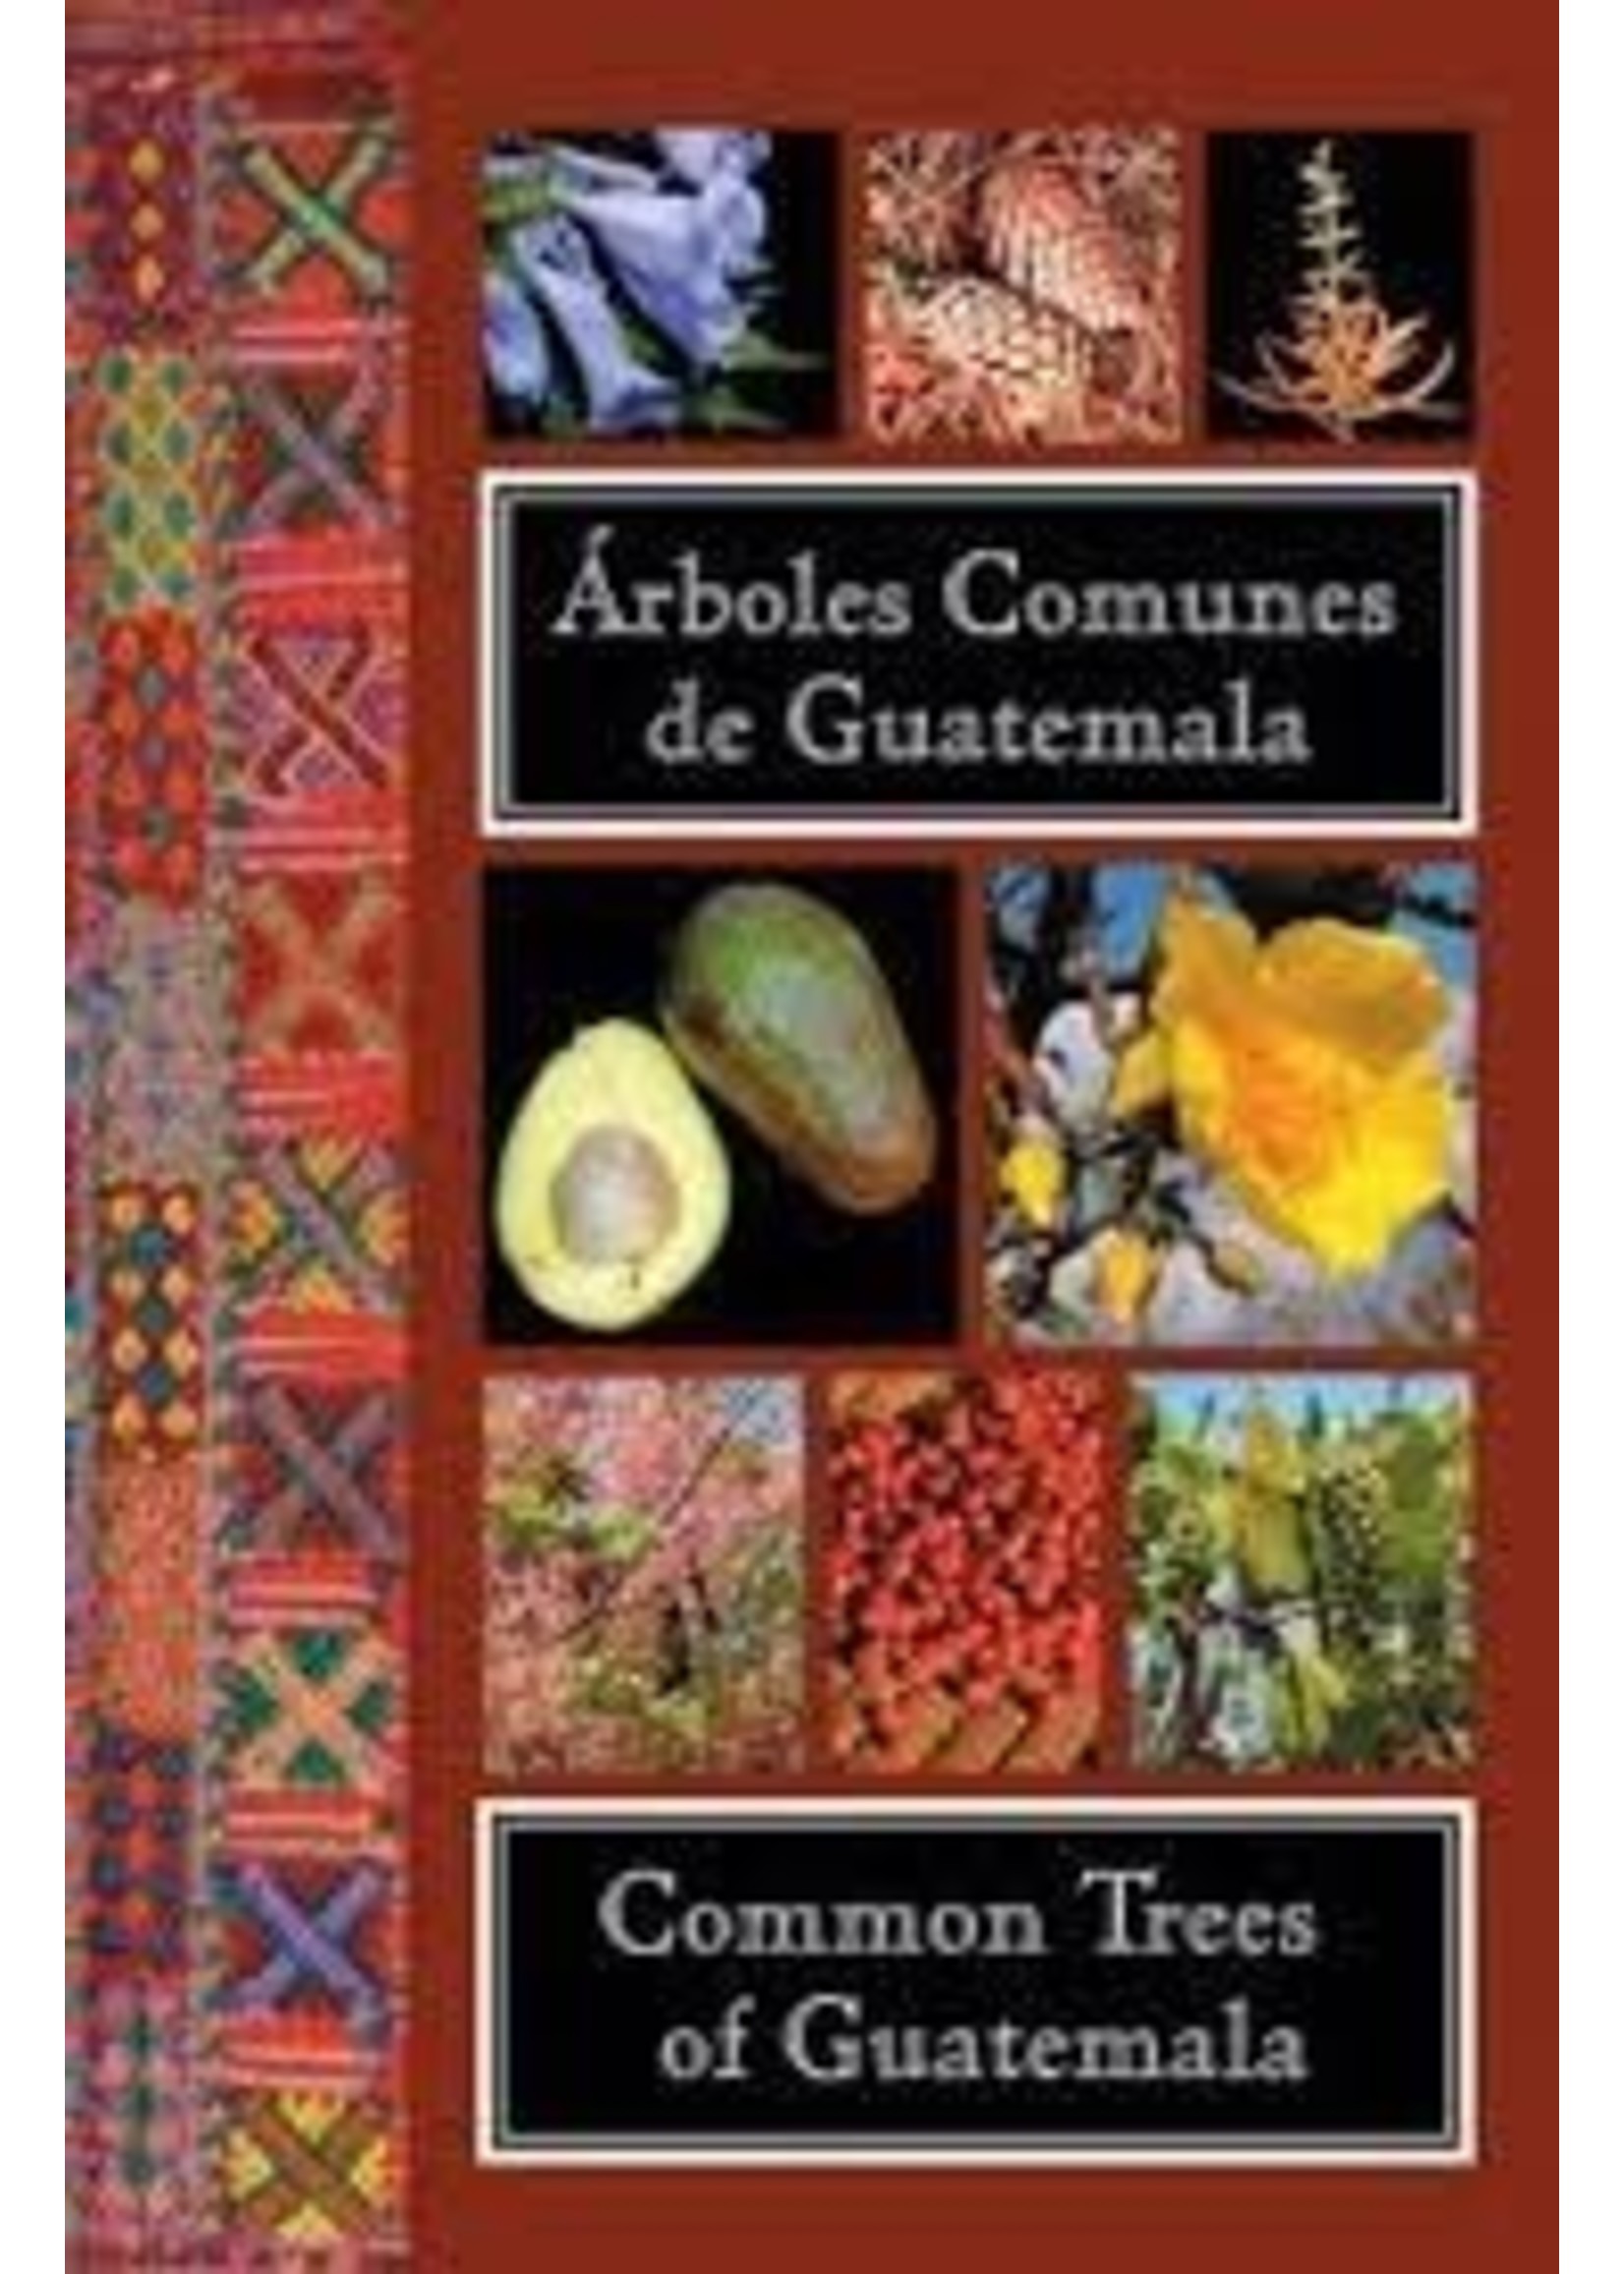 COMMON TREES OF GUATEMALA Arboles Comunes de Guatemala